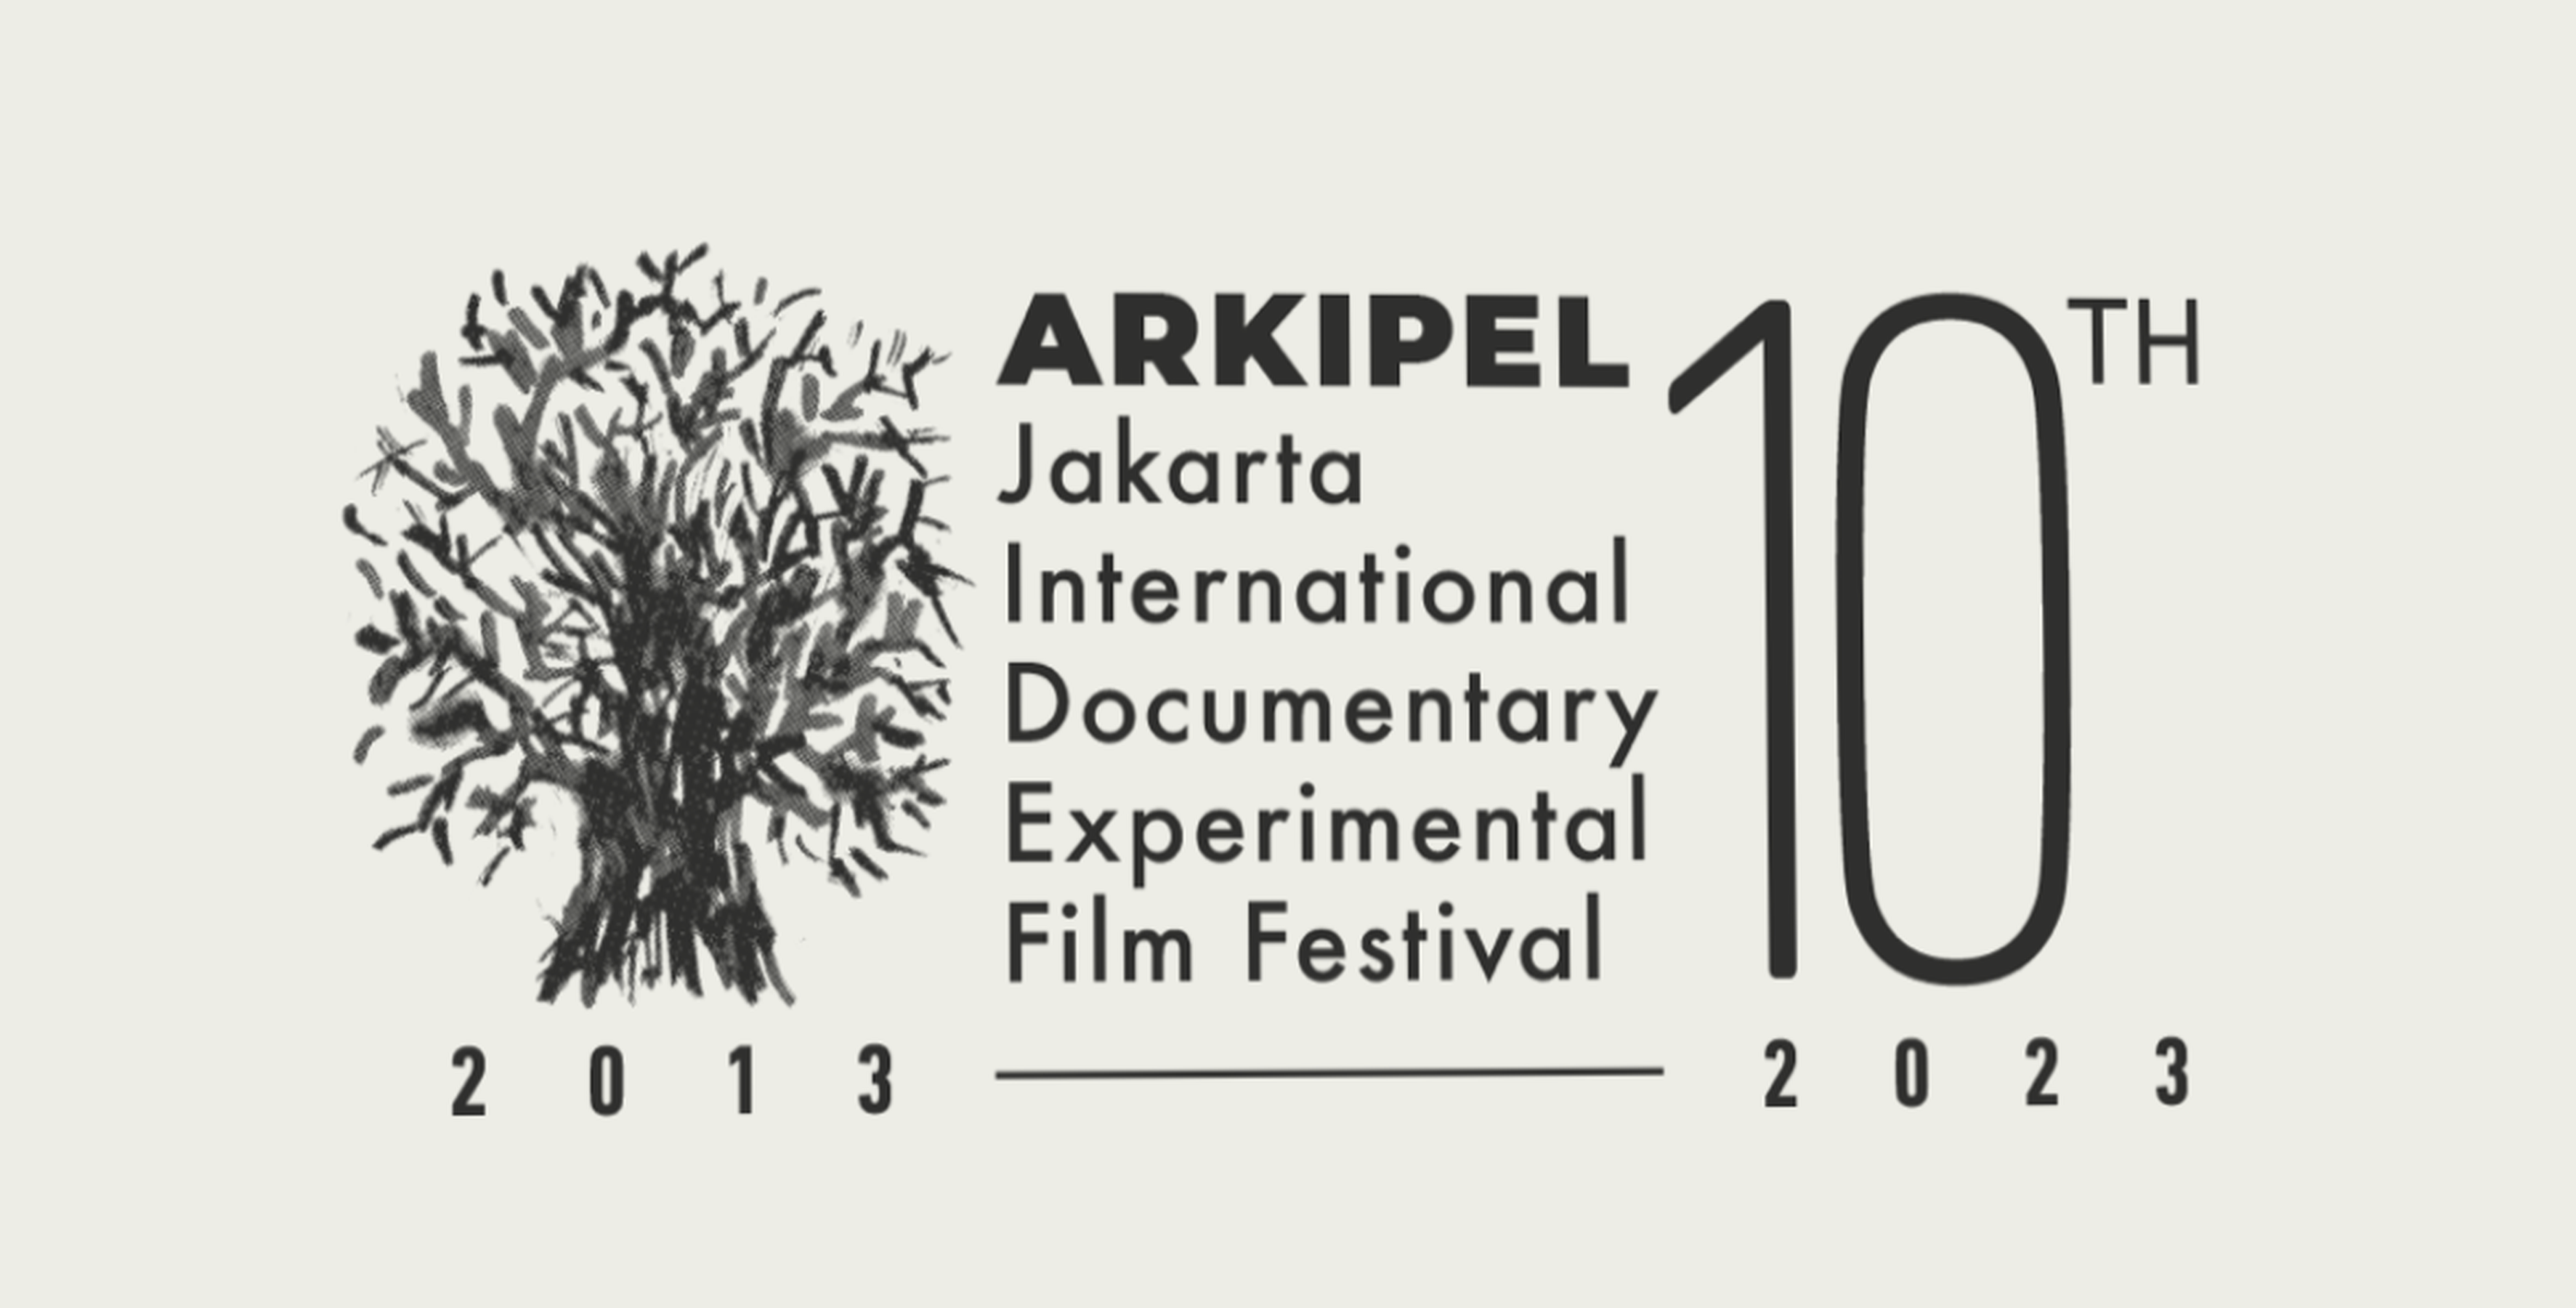 Arkipel International Documentary and Experimental Film Festival